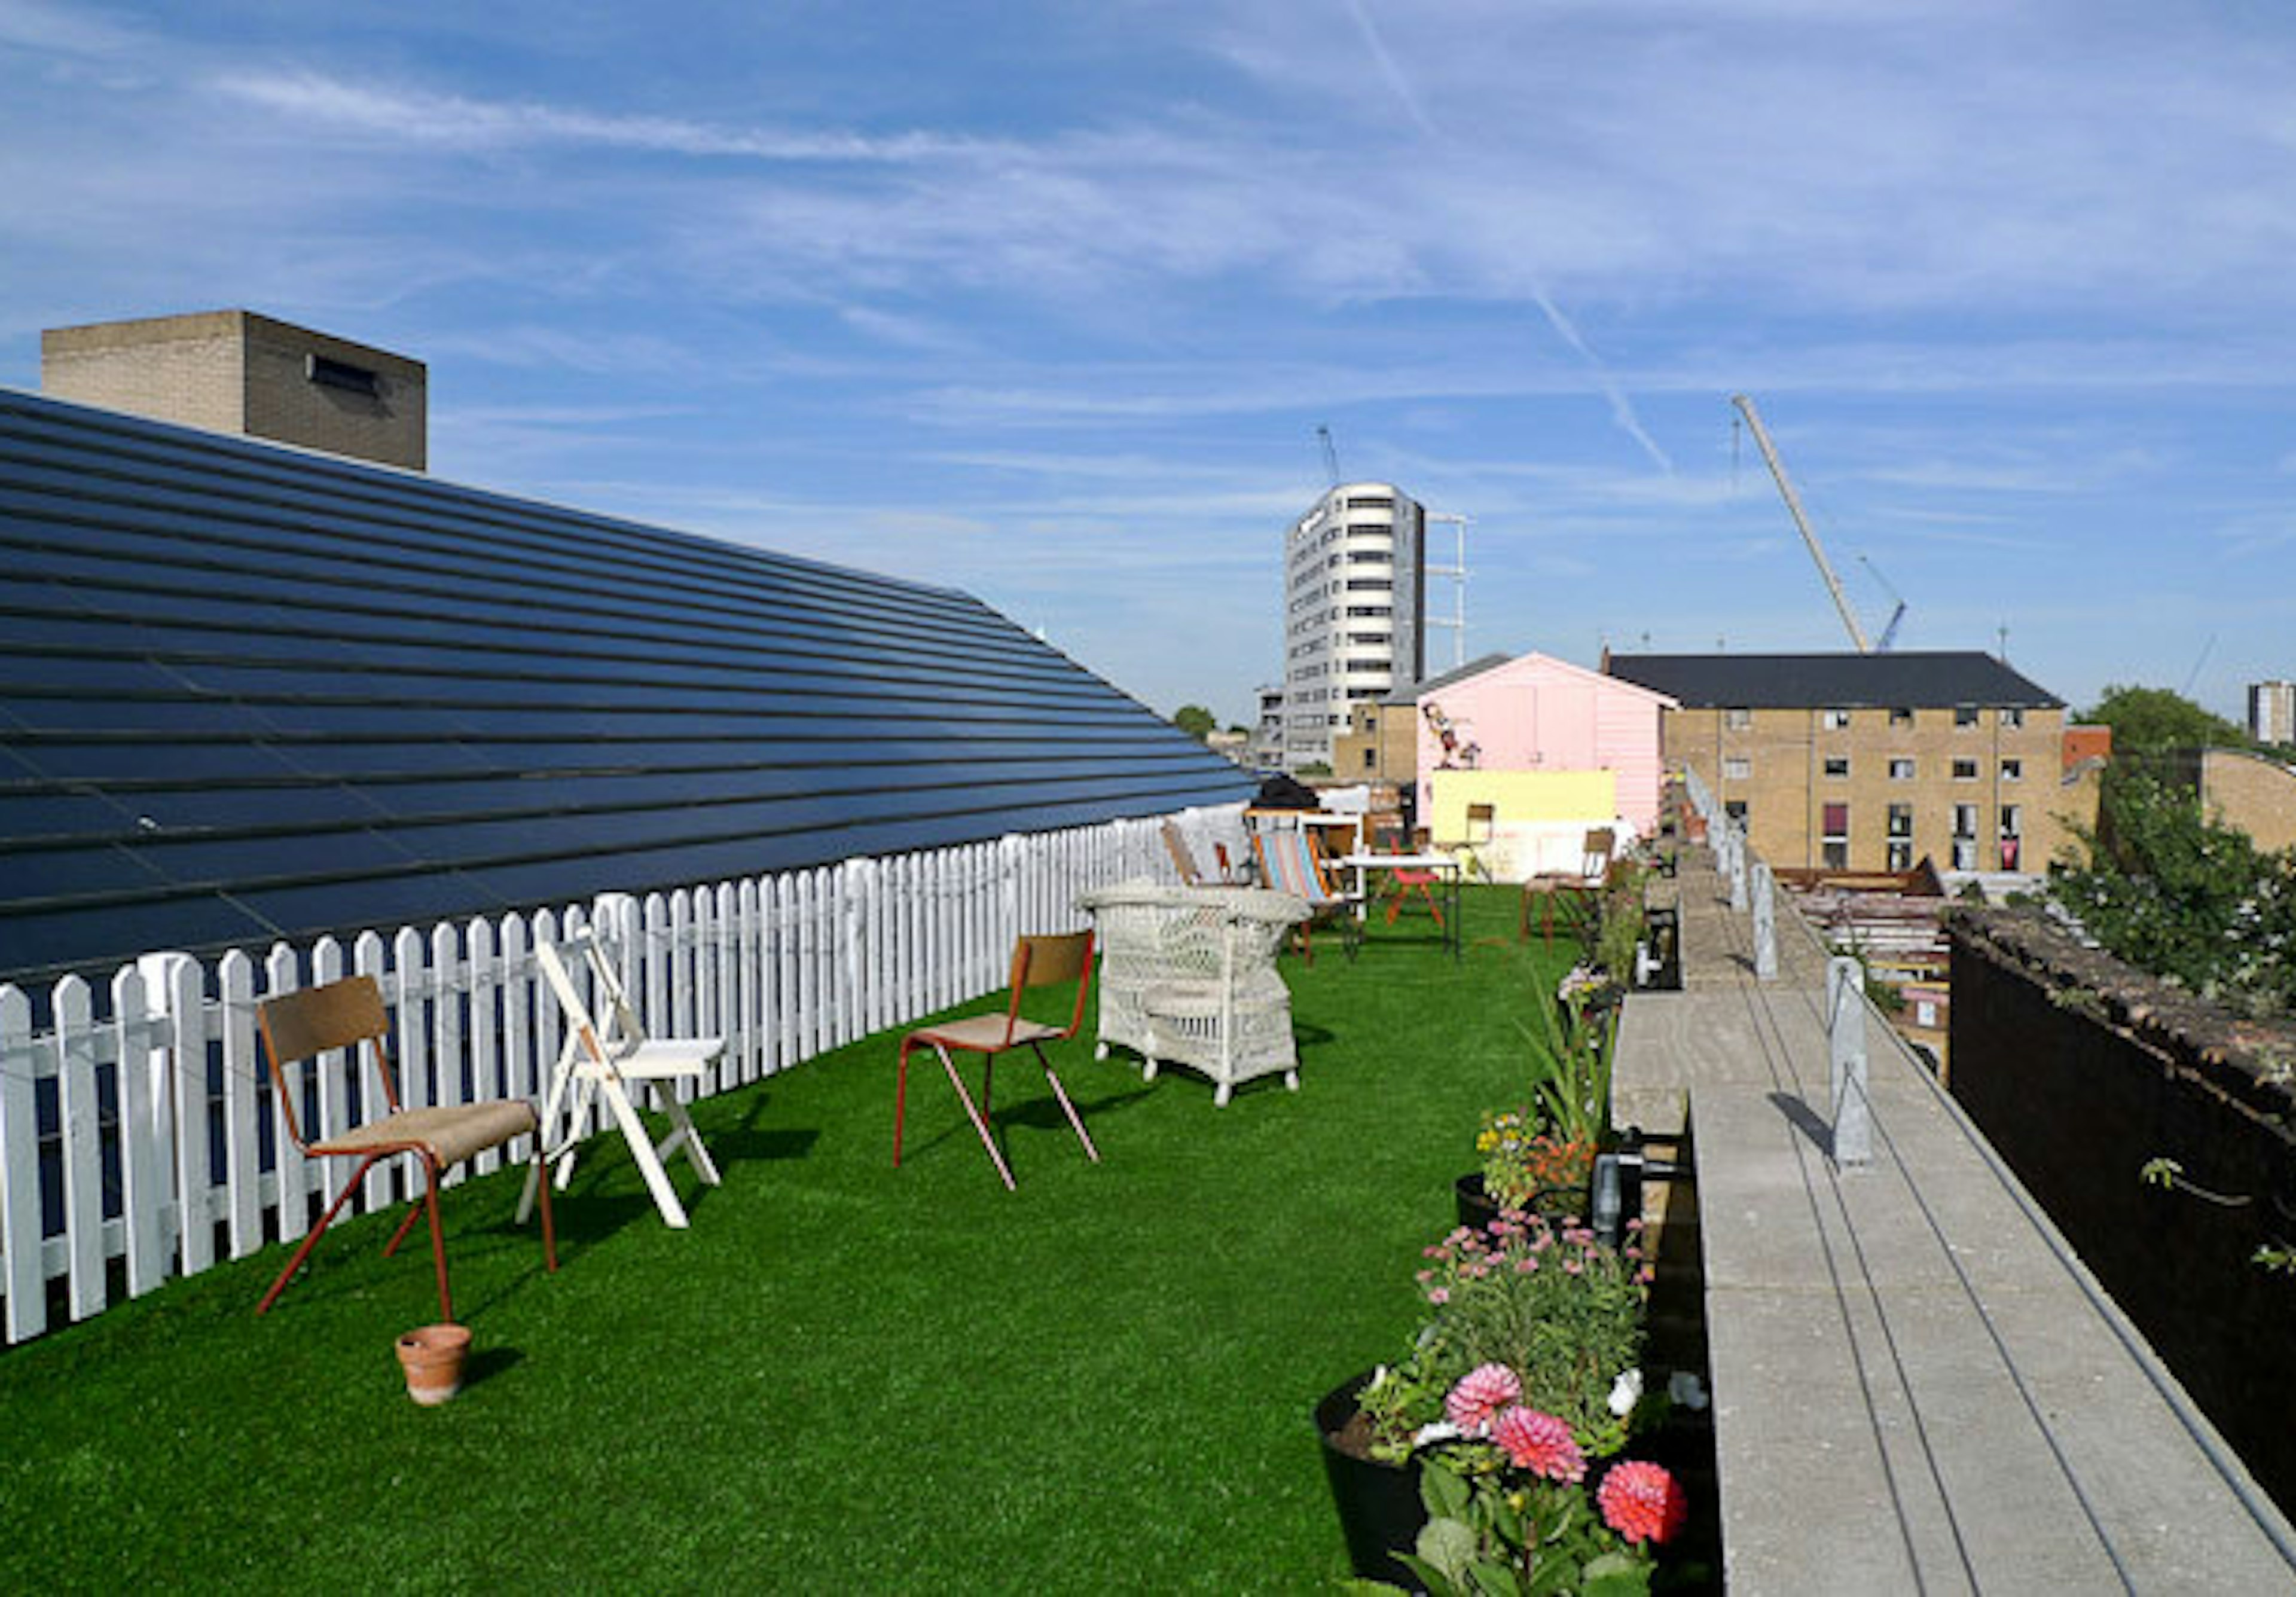 Events - Dalston Roofpark